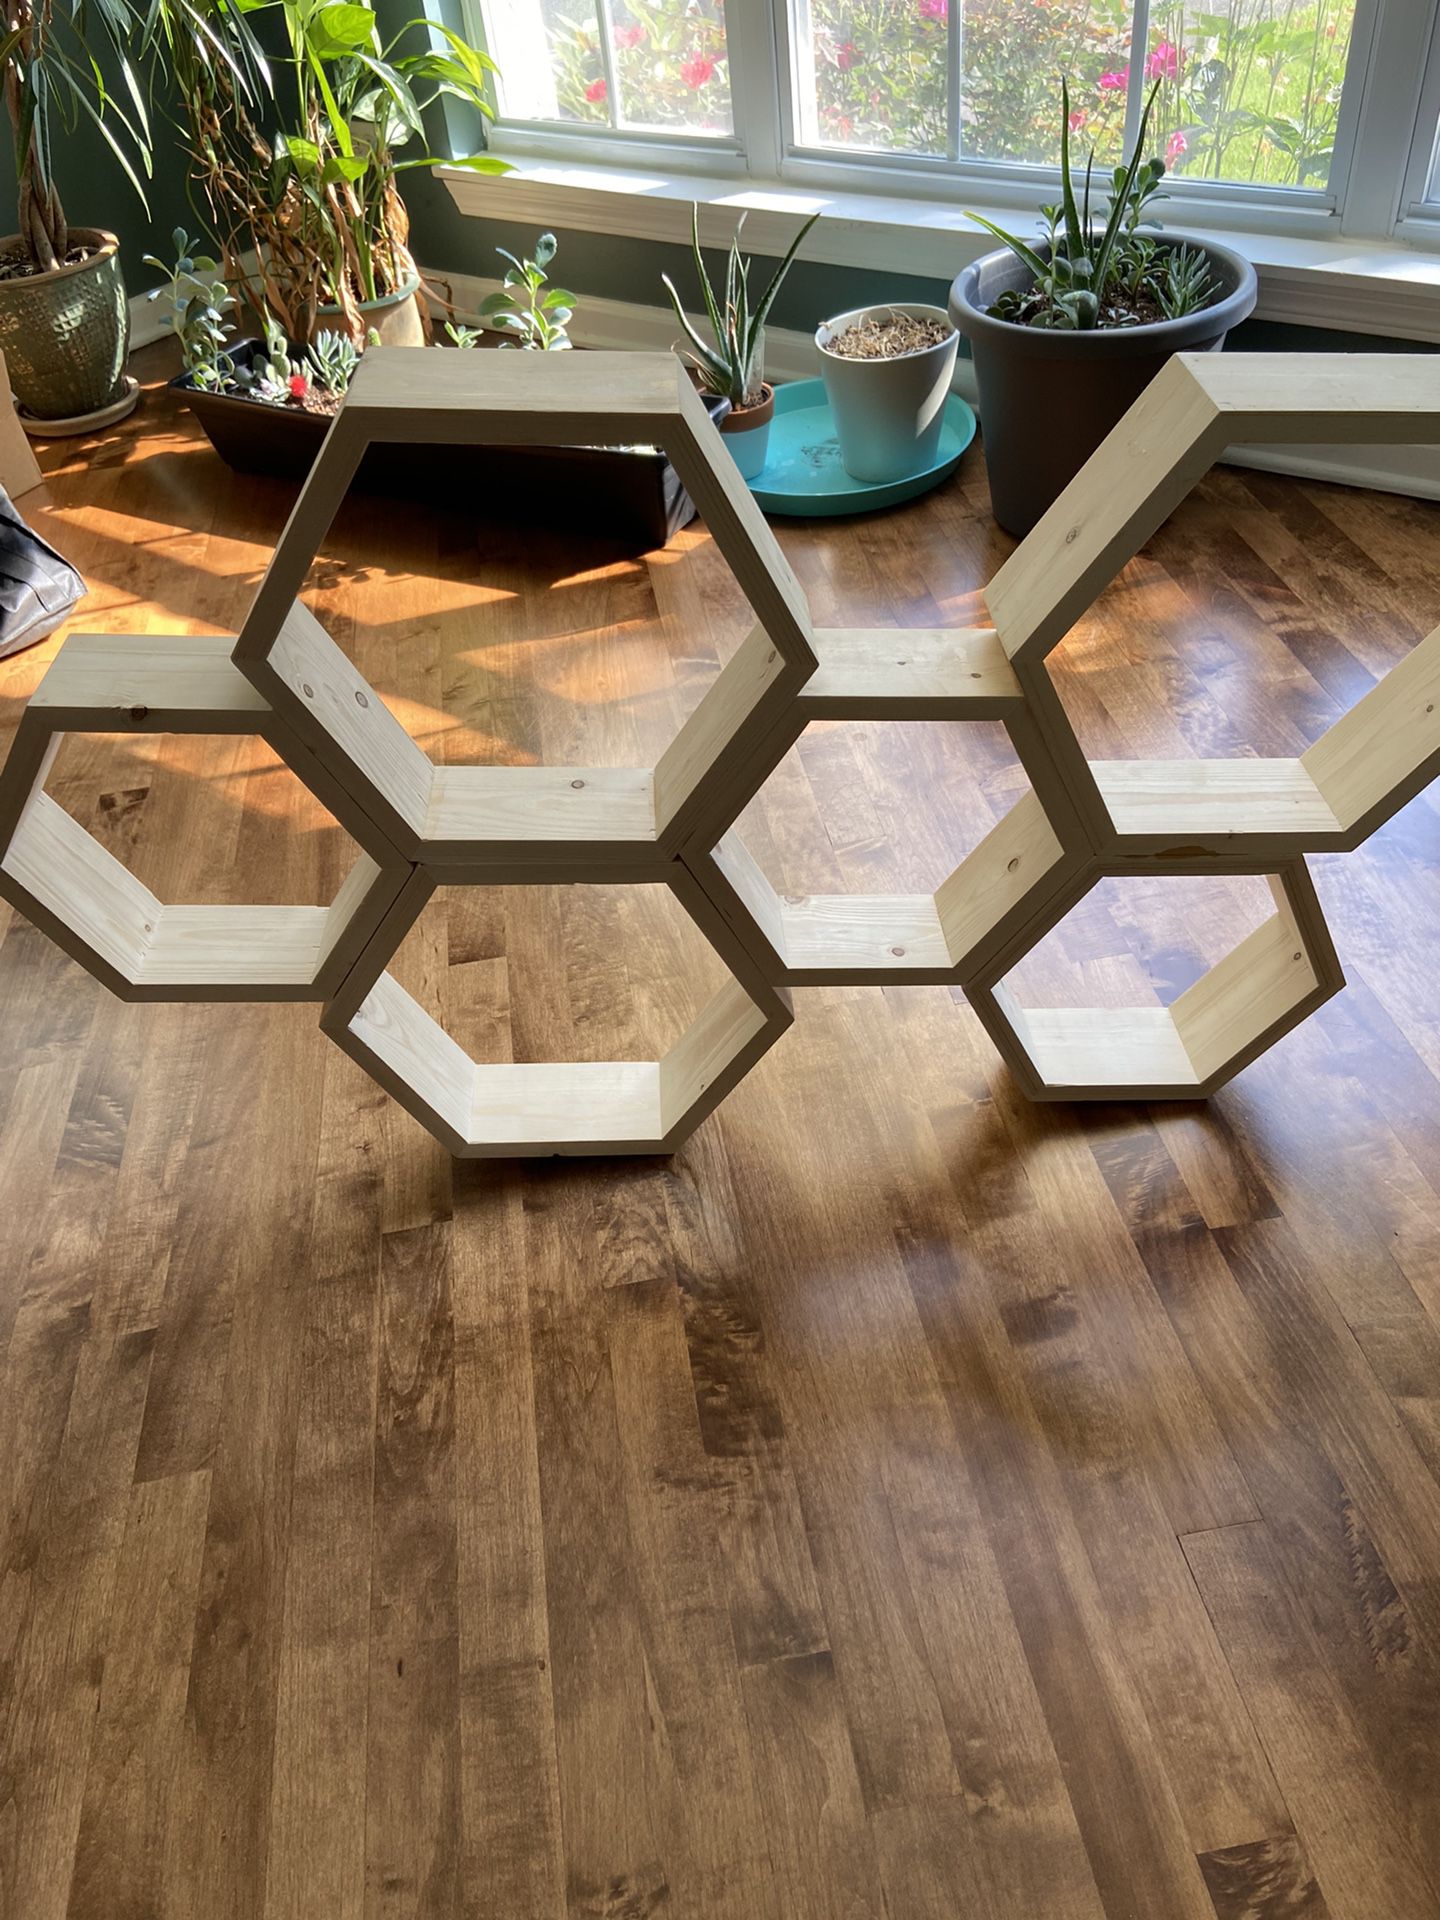 Honeycomb Hexagon Shelves Good For Wedding Or Baby Showers 